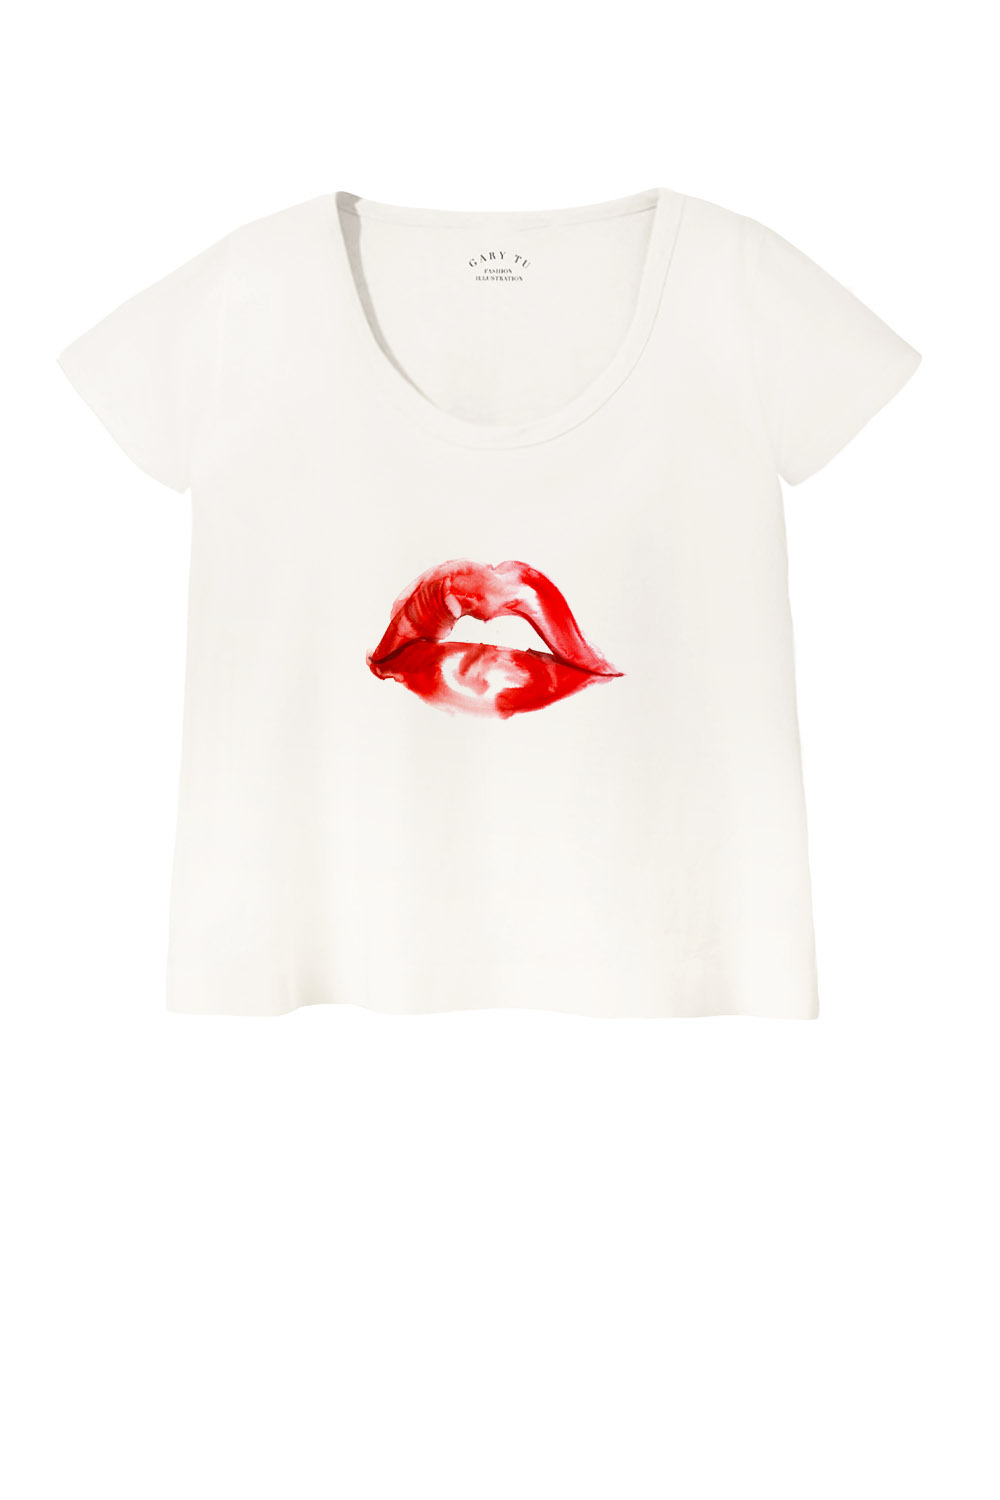 T-shirt Red lips 04